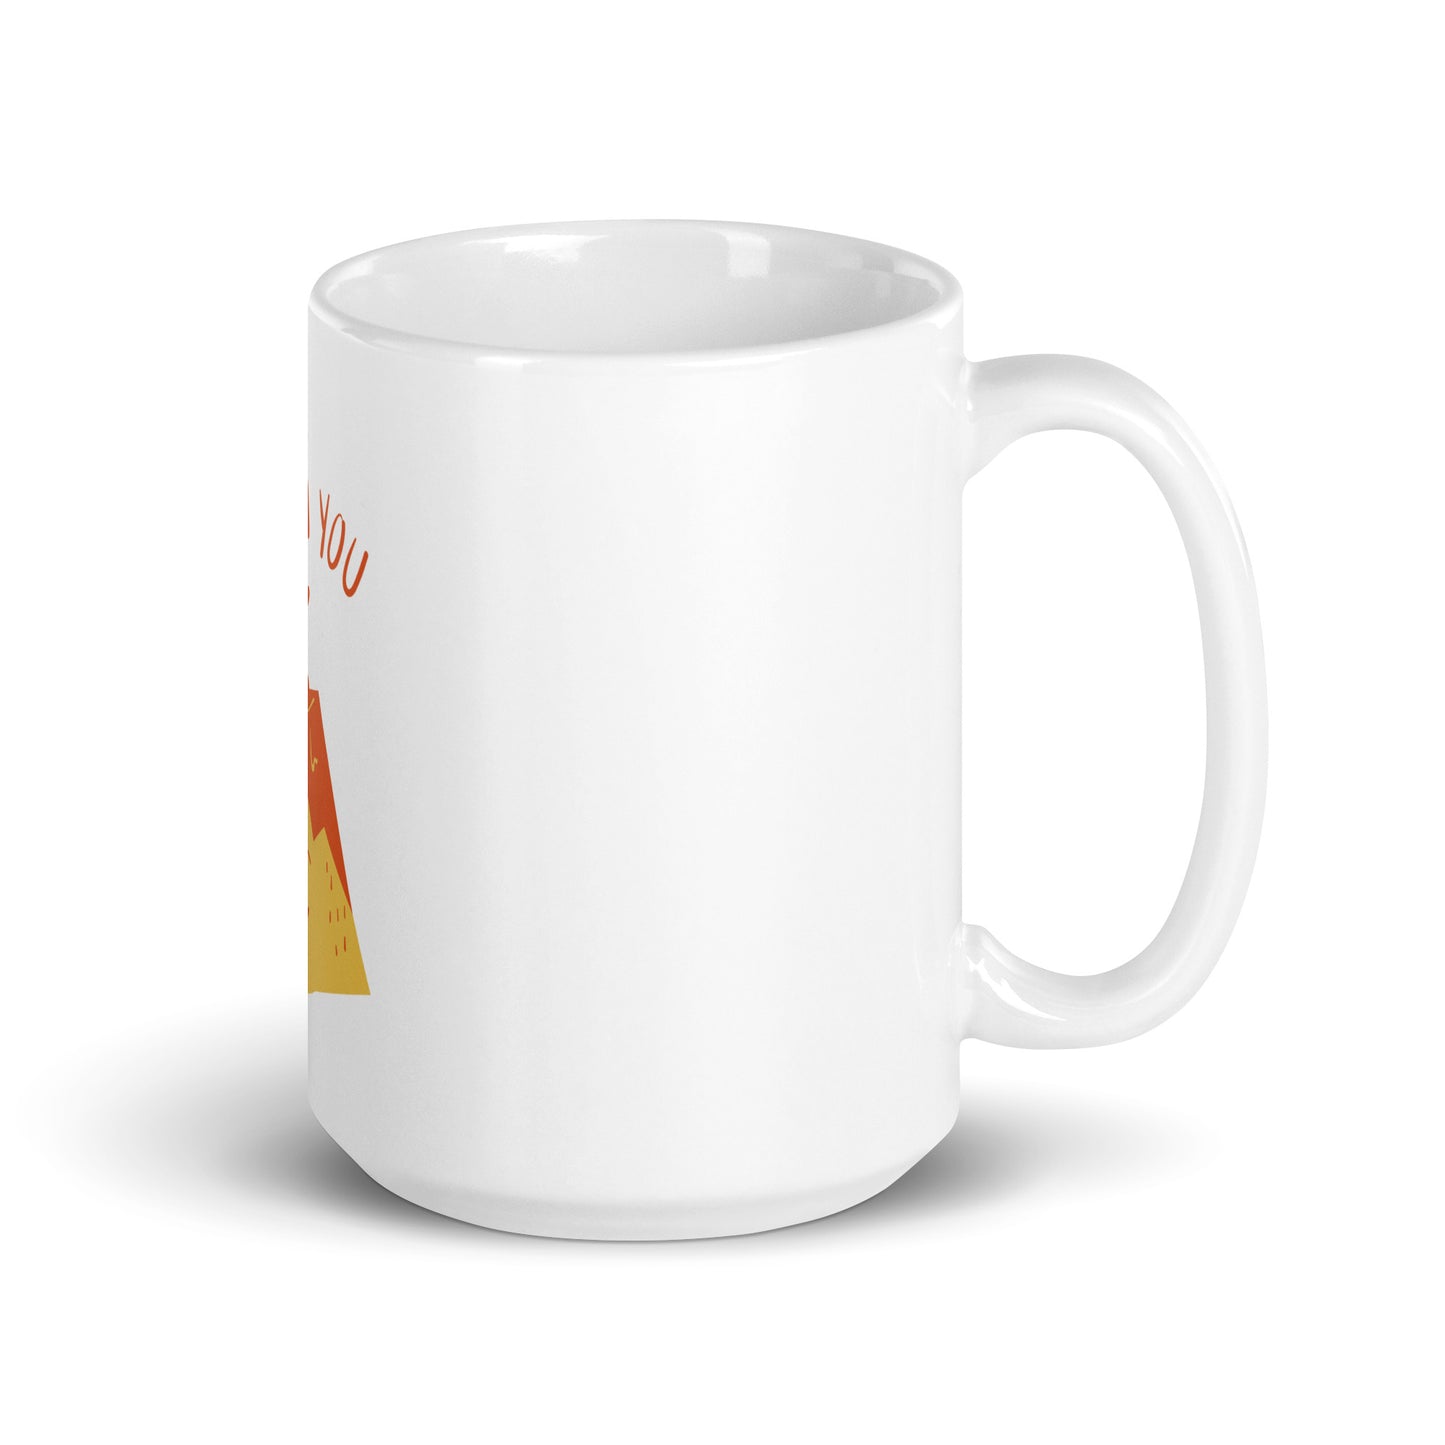 I Lava You - White Glossy Mug for Warm Affection | Unique Gift Idea